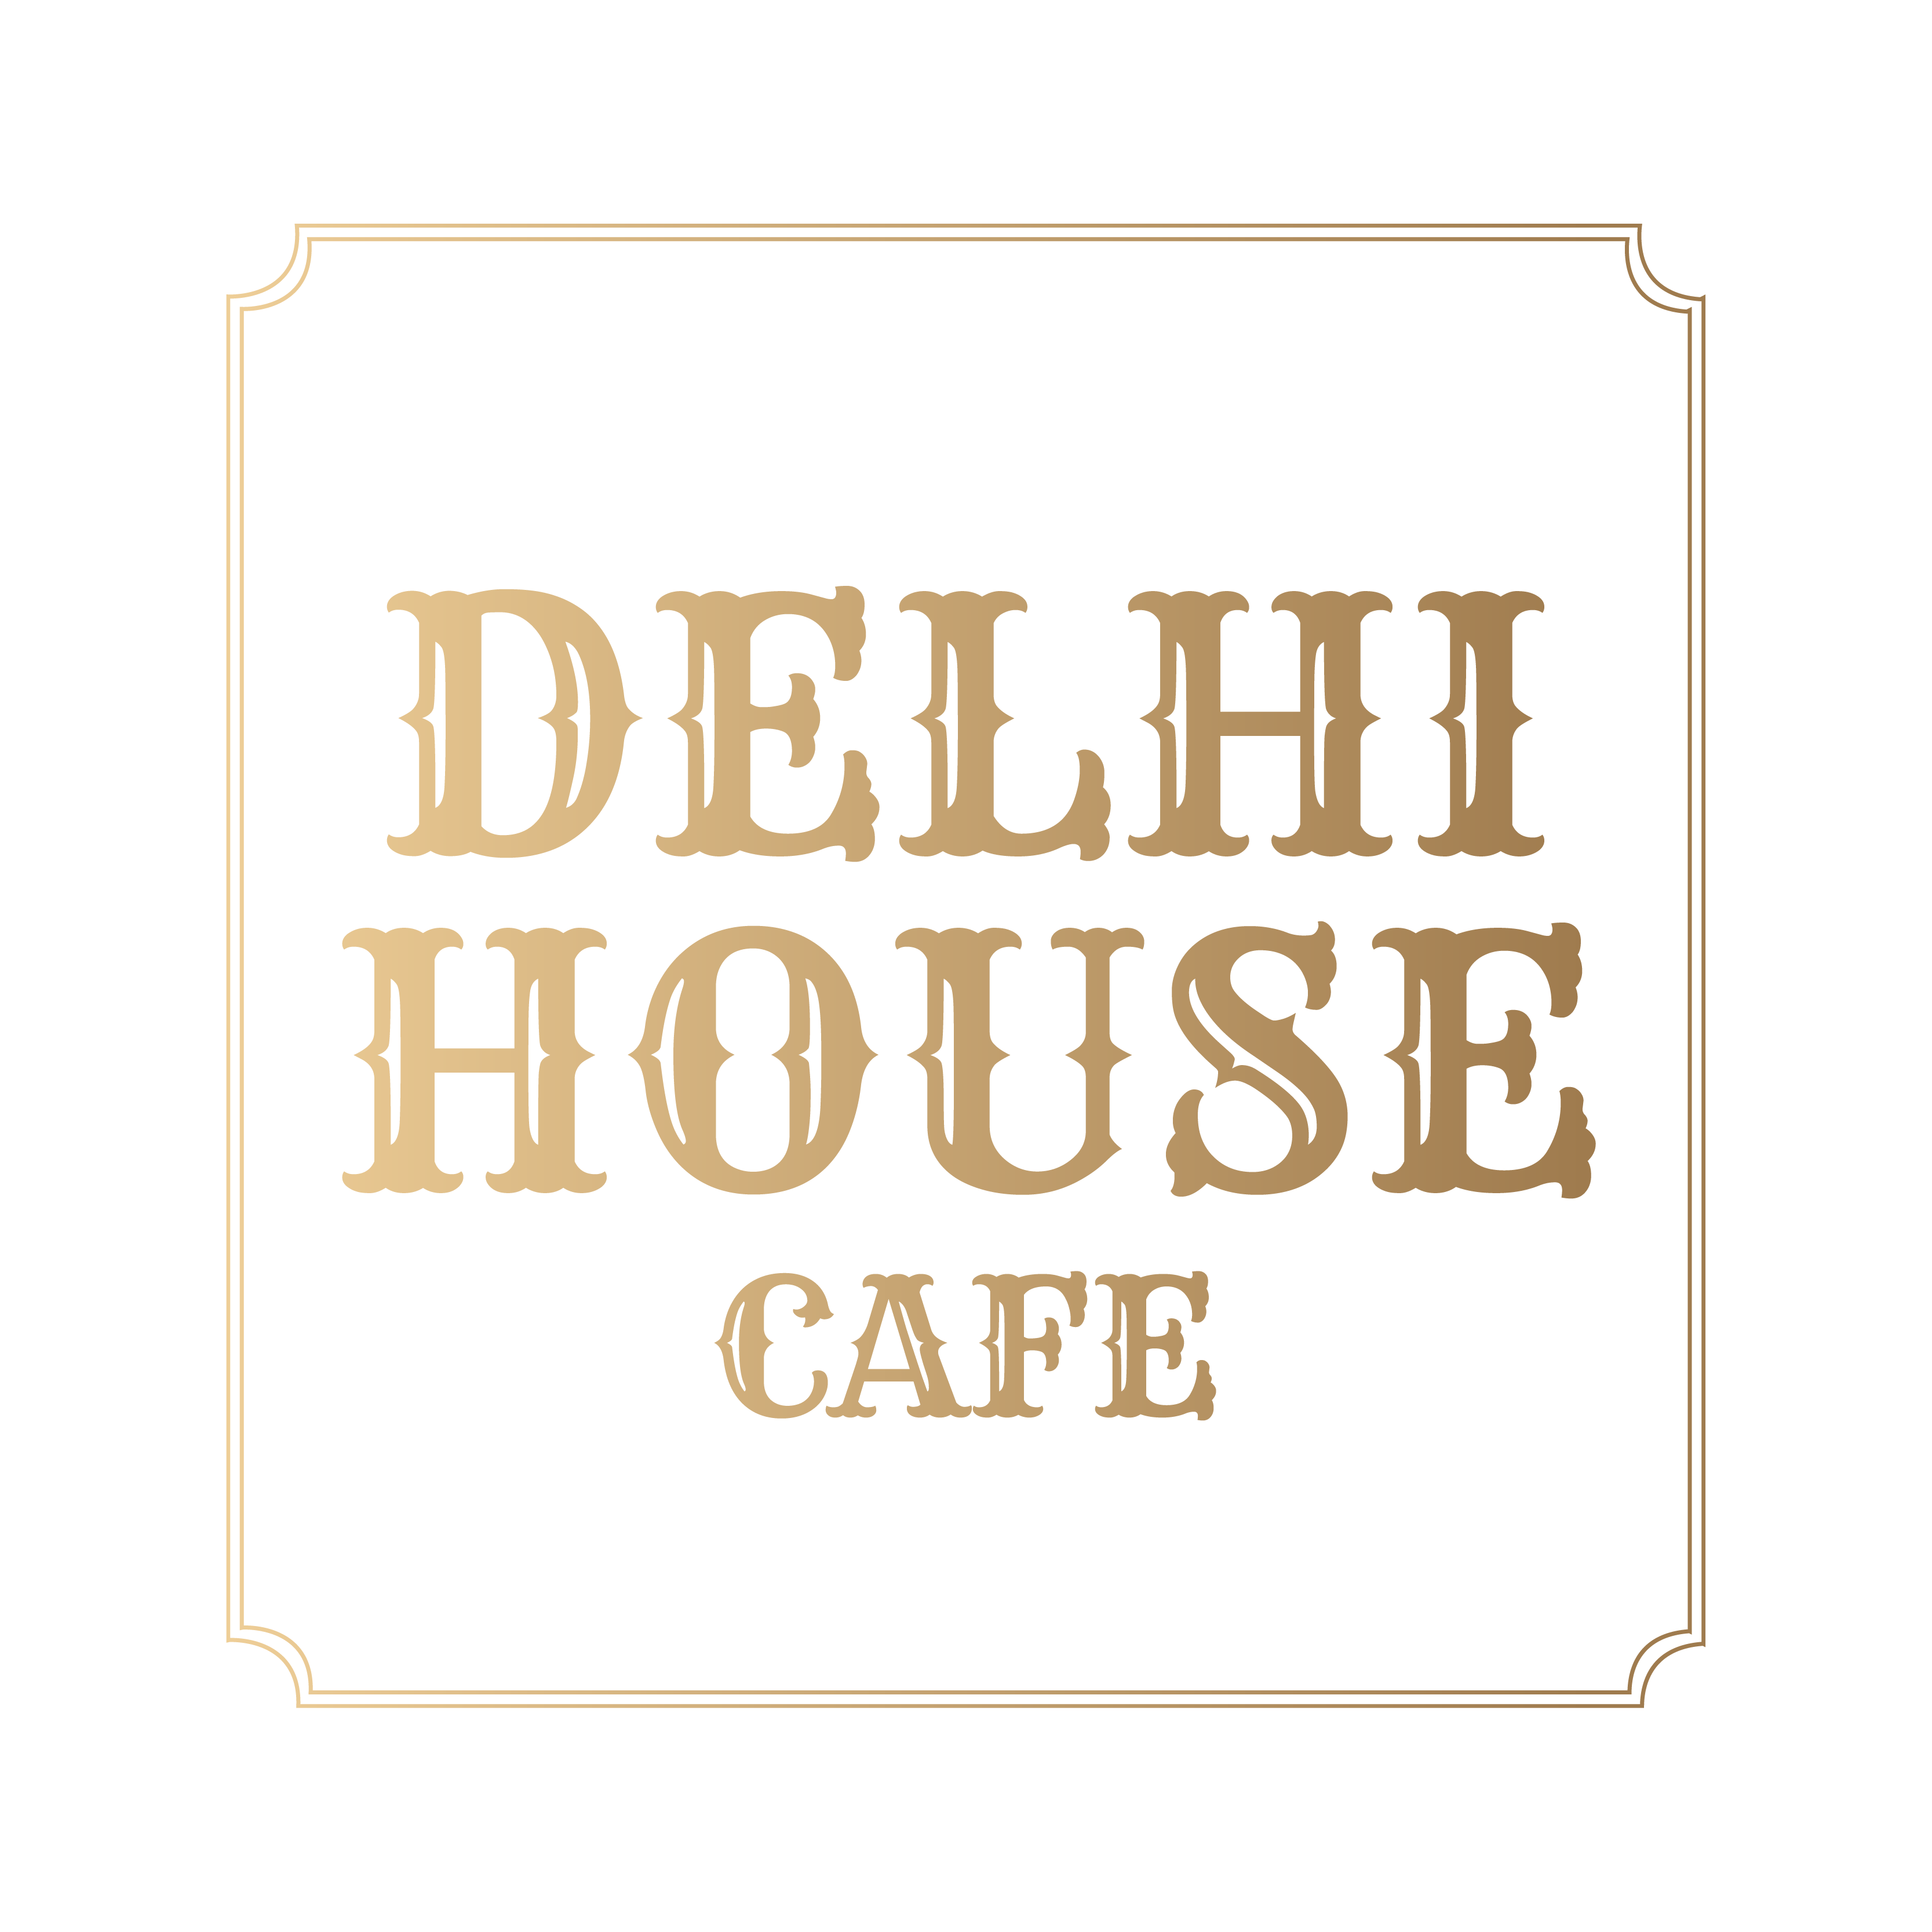 Delhi House Cafe